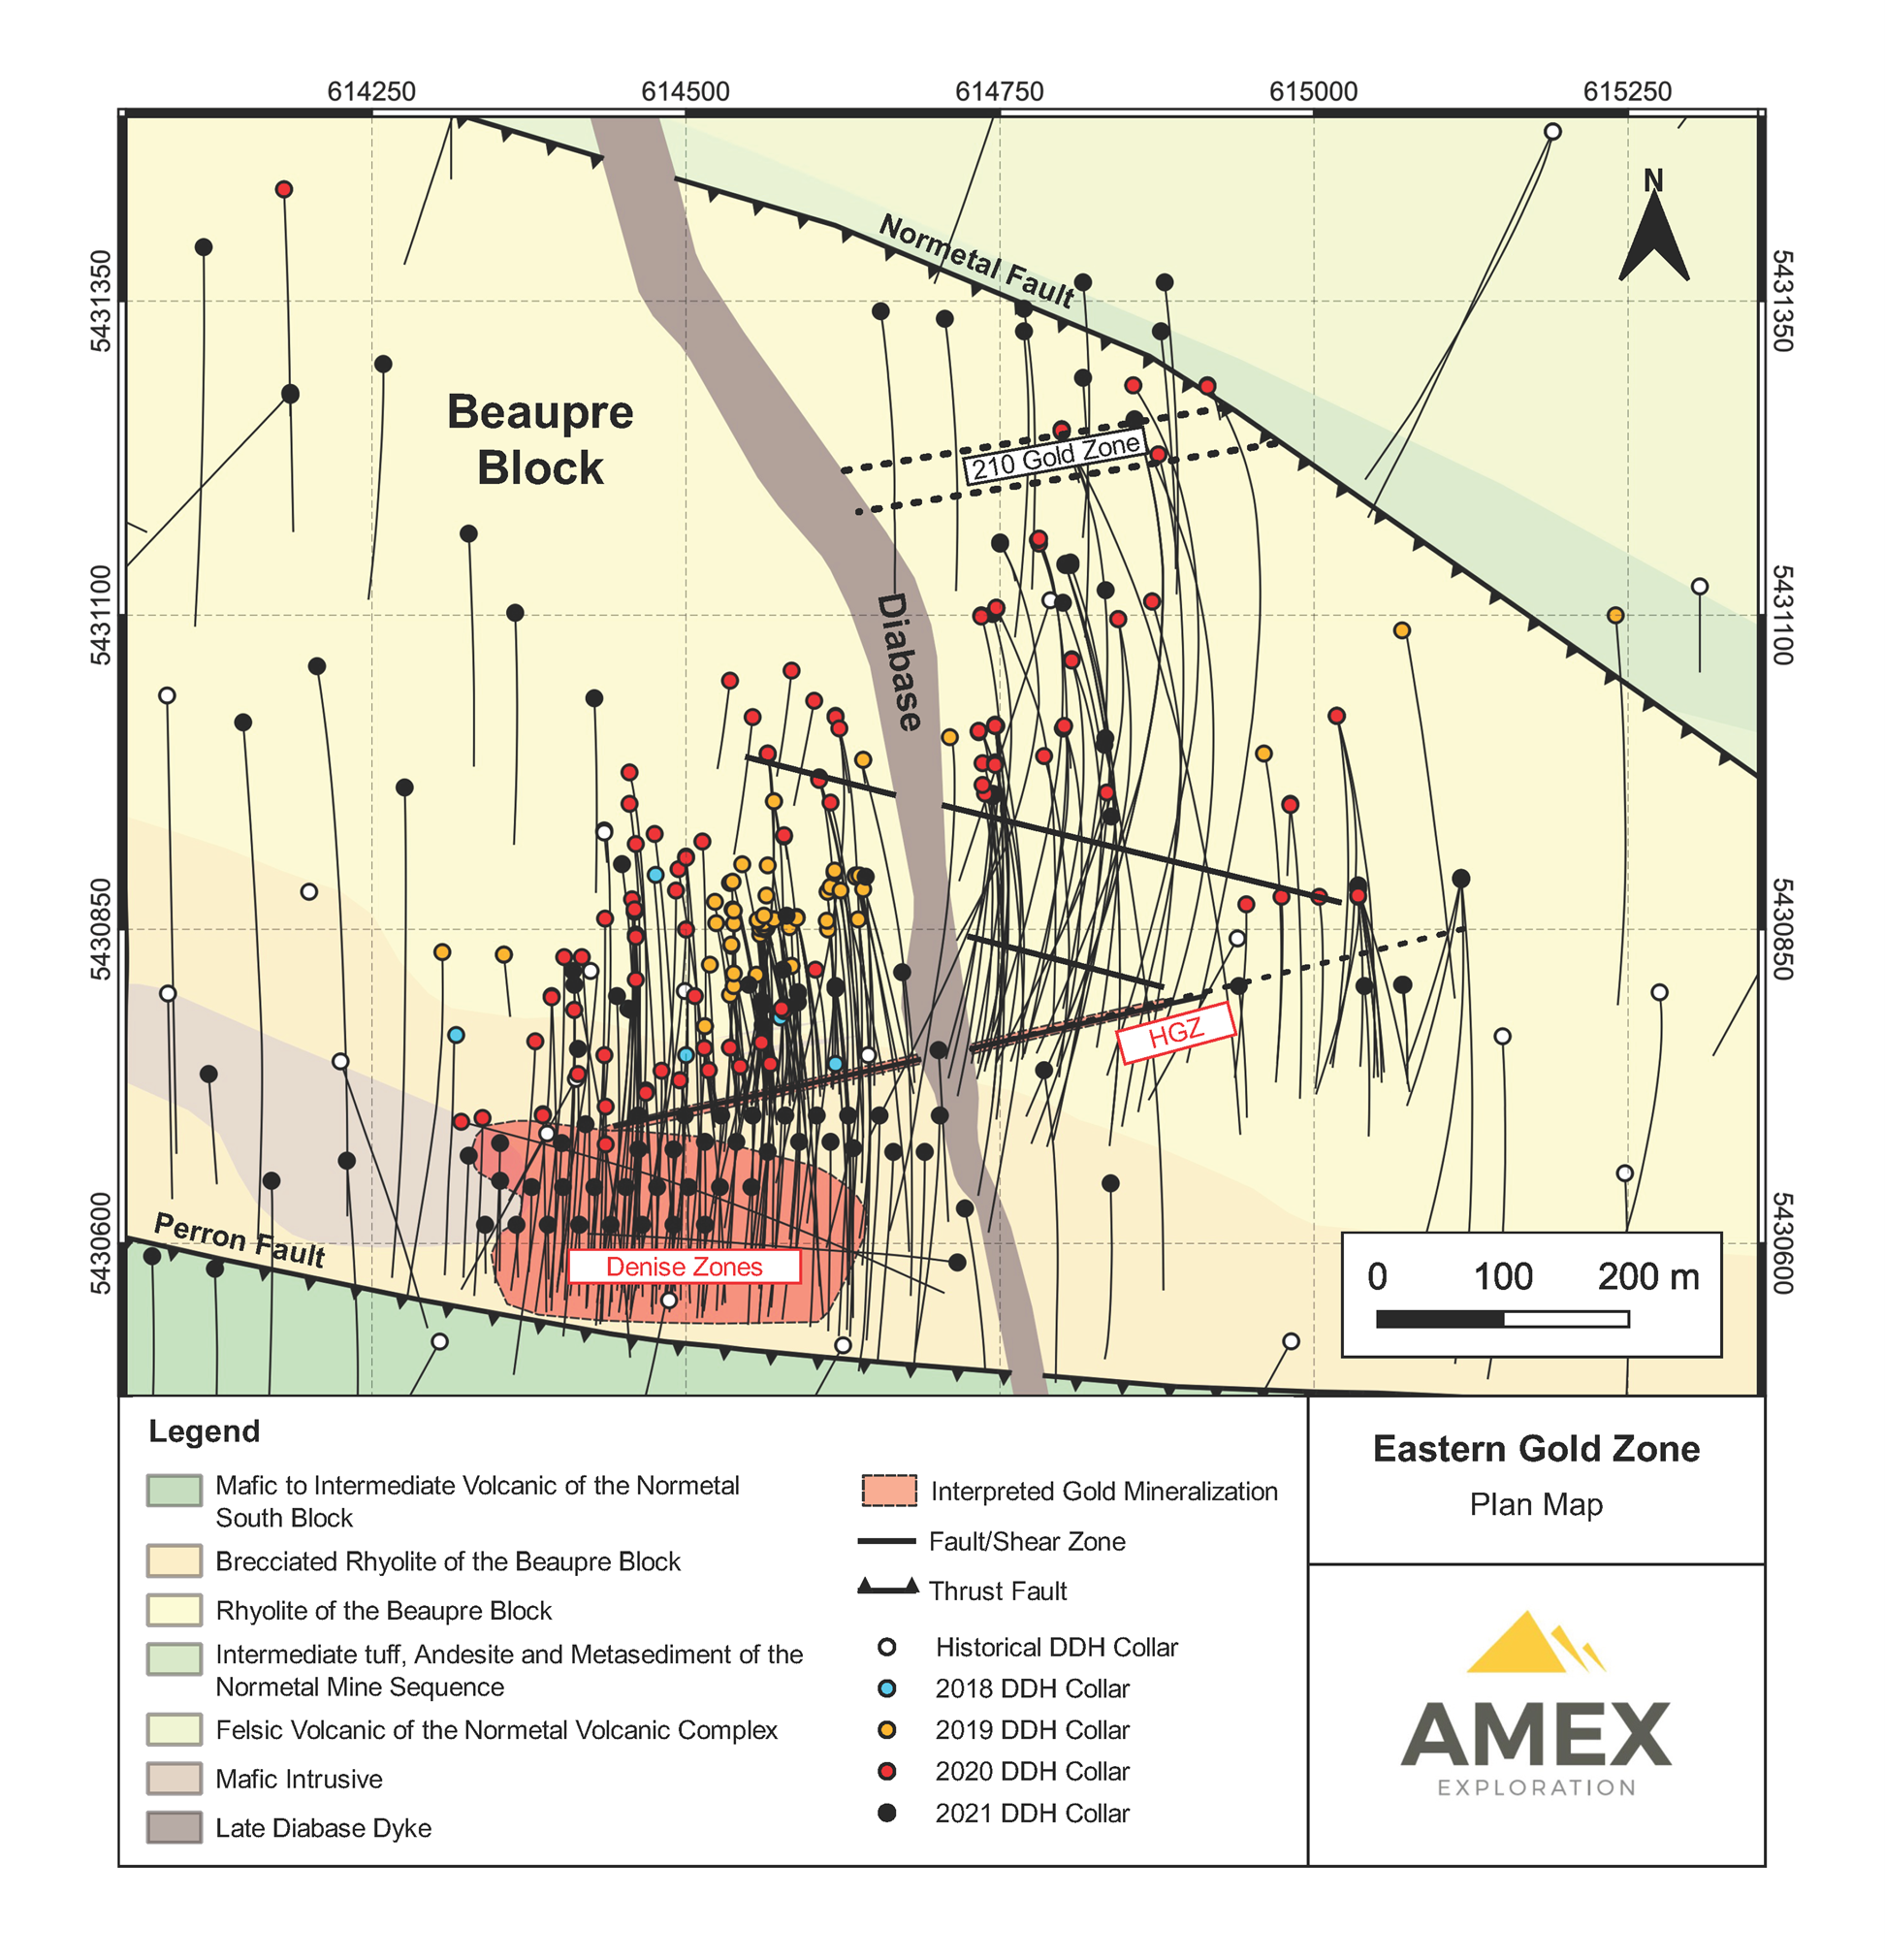 Amex Exploration, Inc., Monday, June 28, 2021, Press release picture